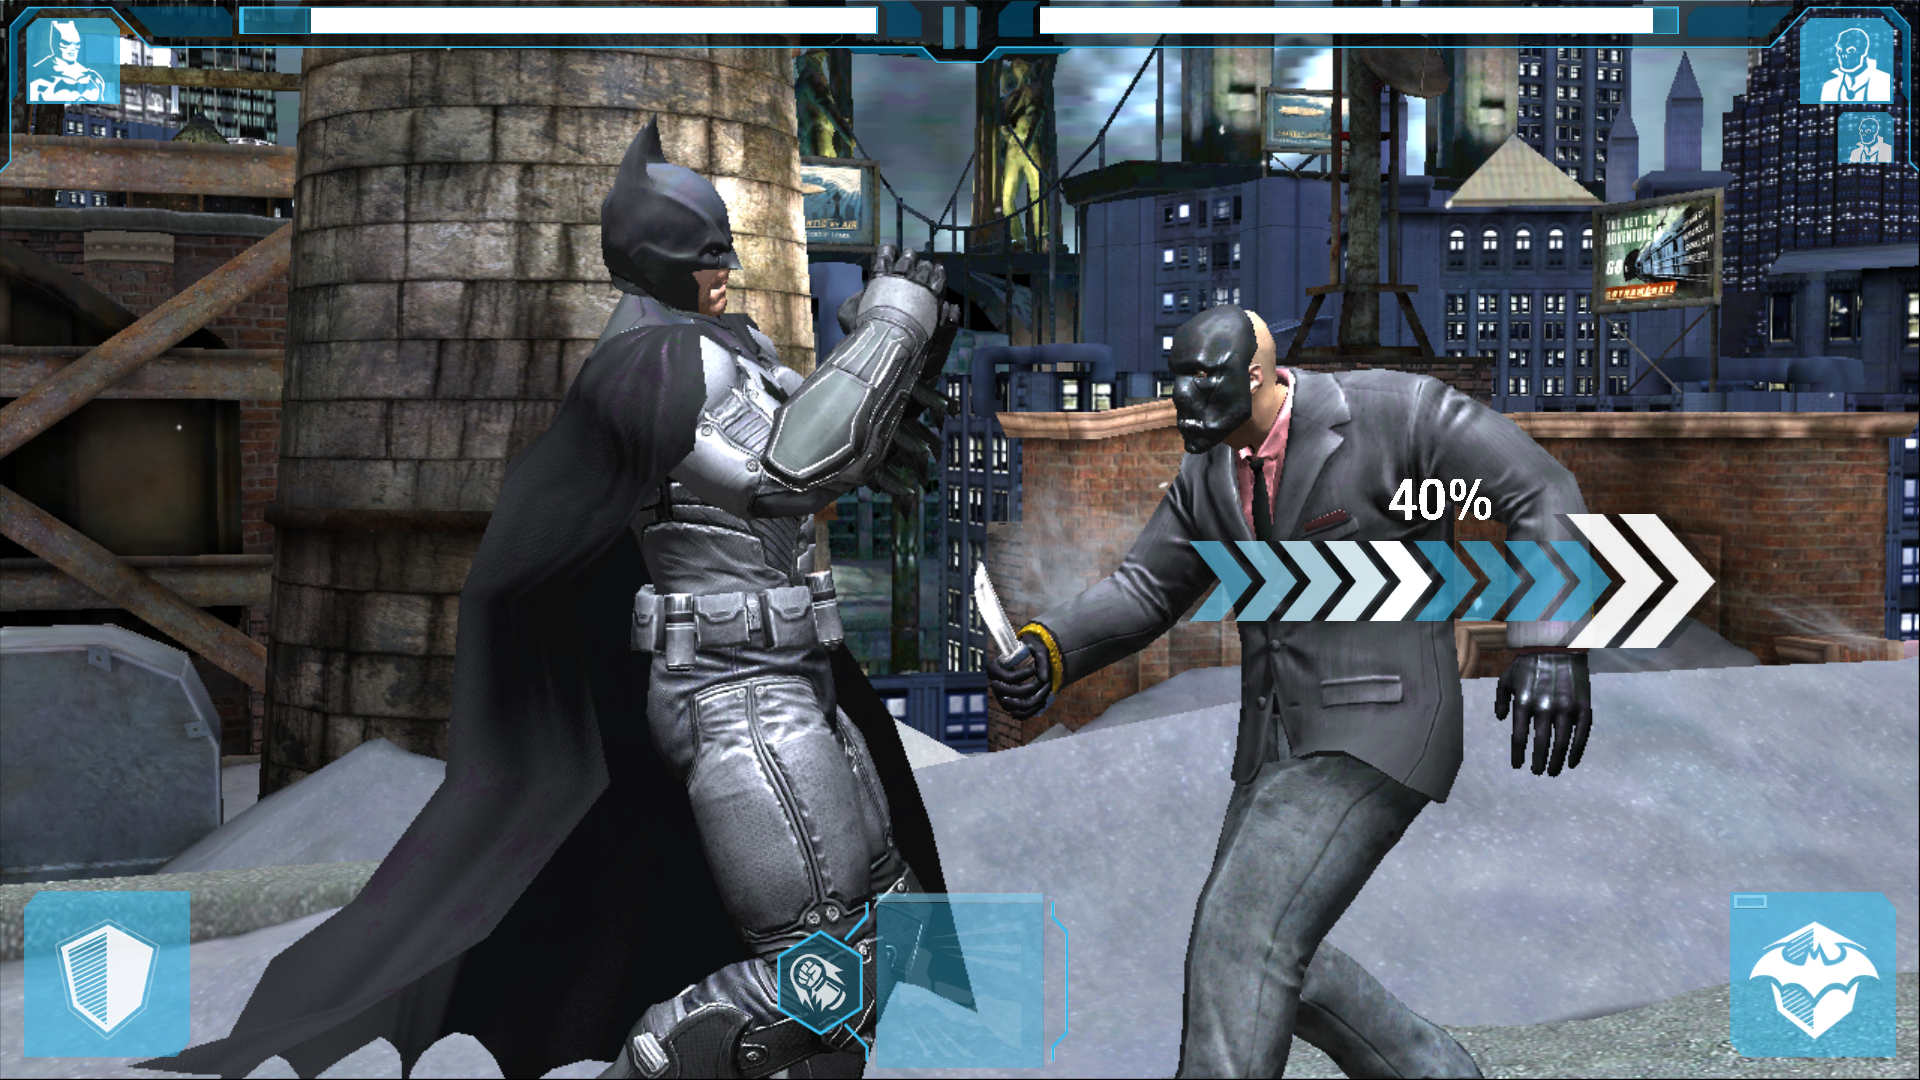 Batman vita. Batman Arkham Origins Blackgate PS Vita. Batman Blackgate PS Vita. Batman BLACKCAT PS Vita.